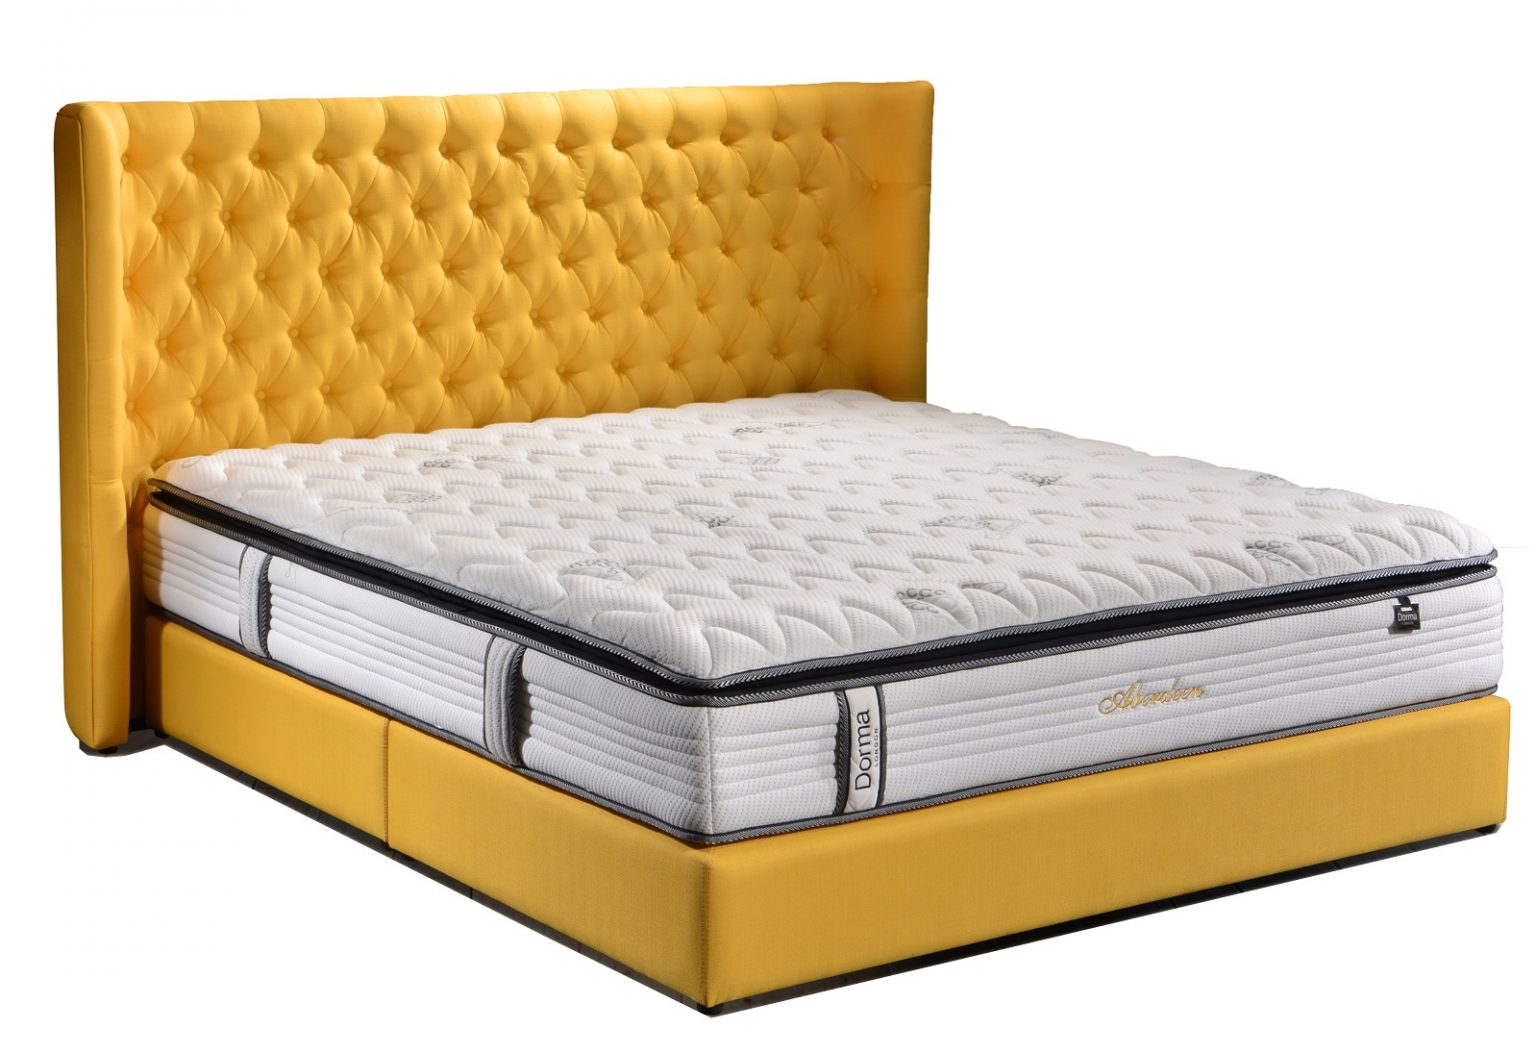 dorma mattress review malaysia